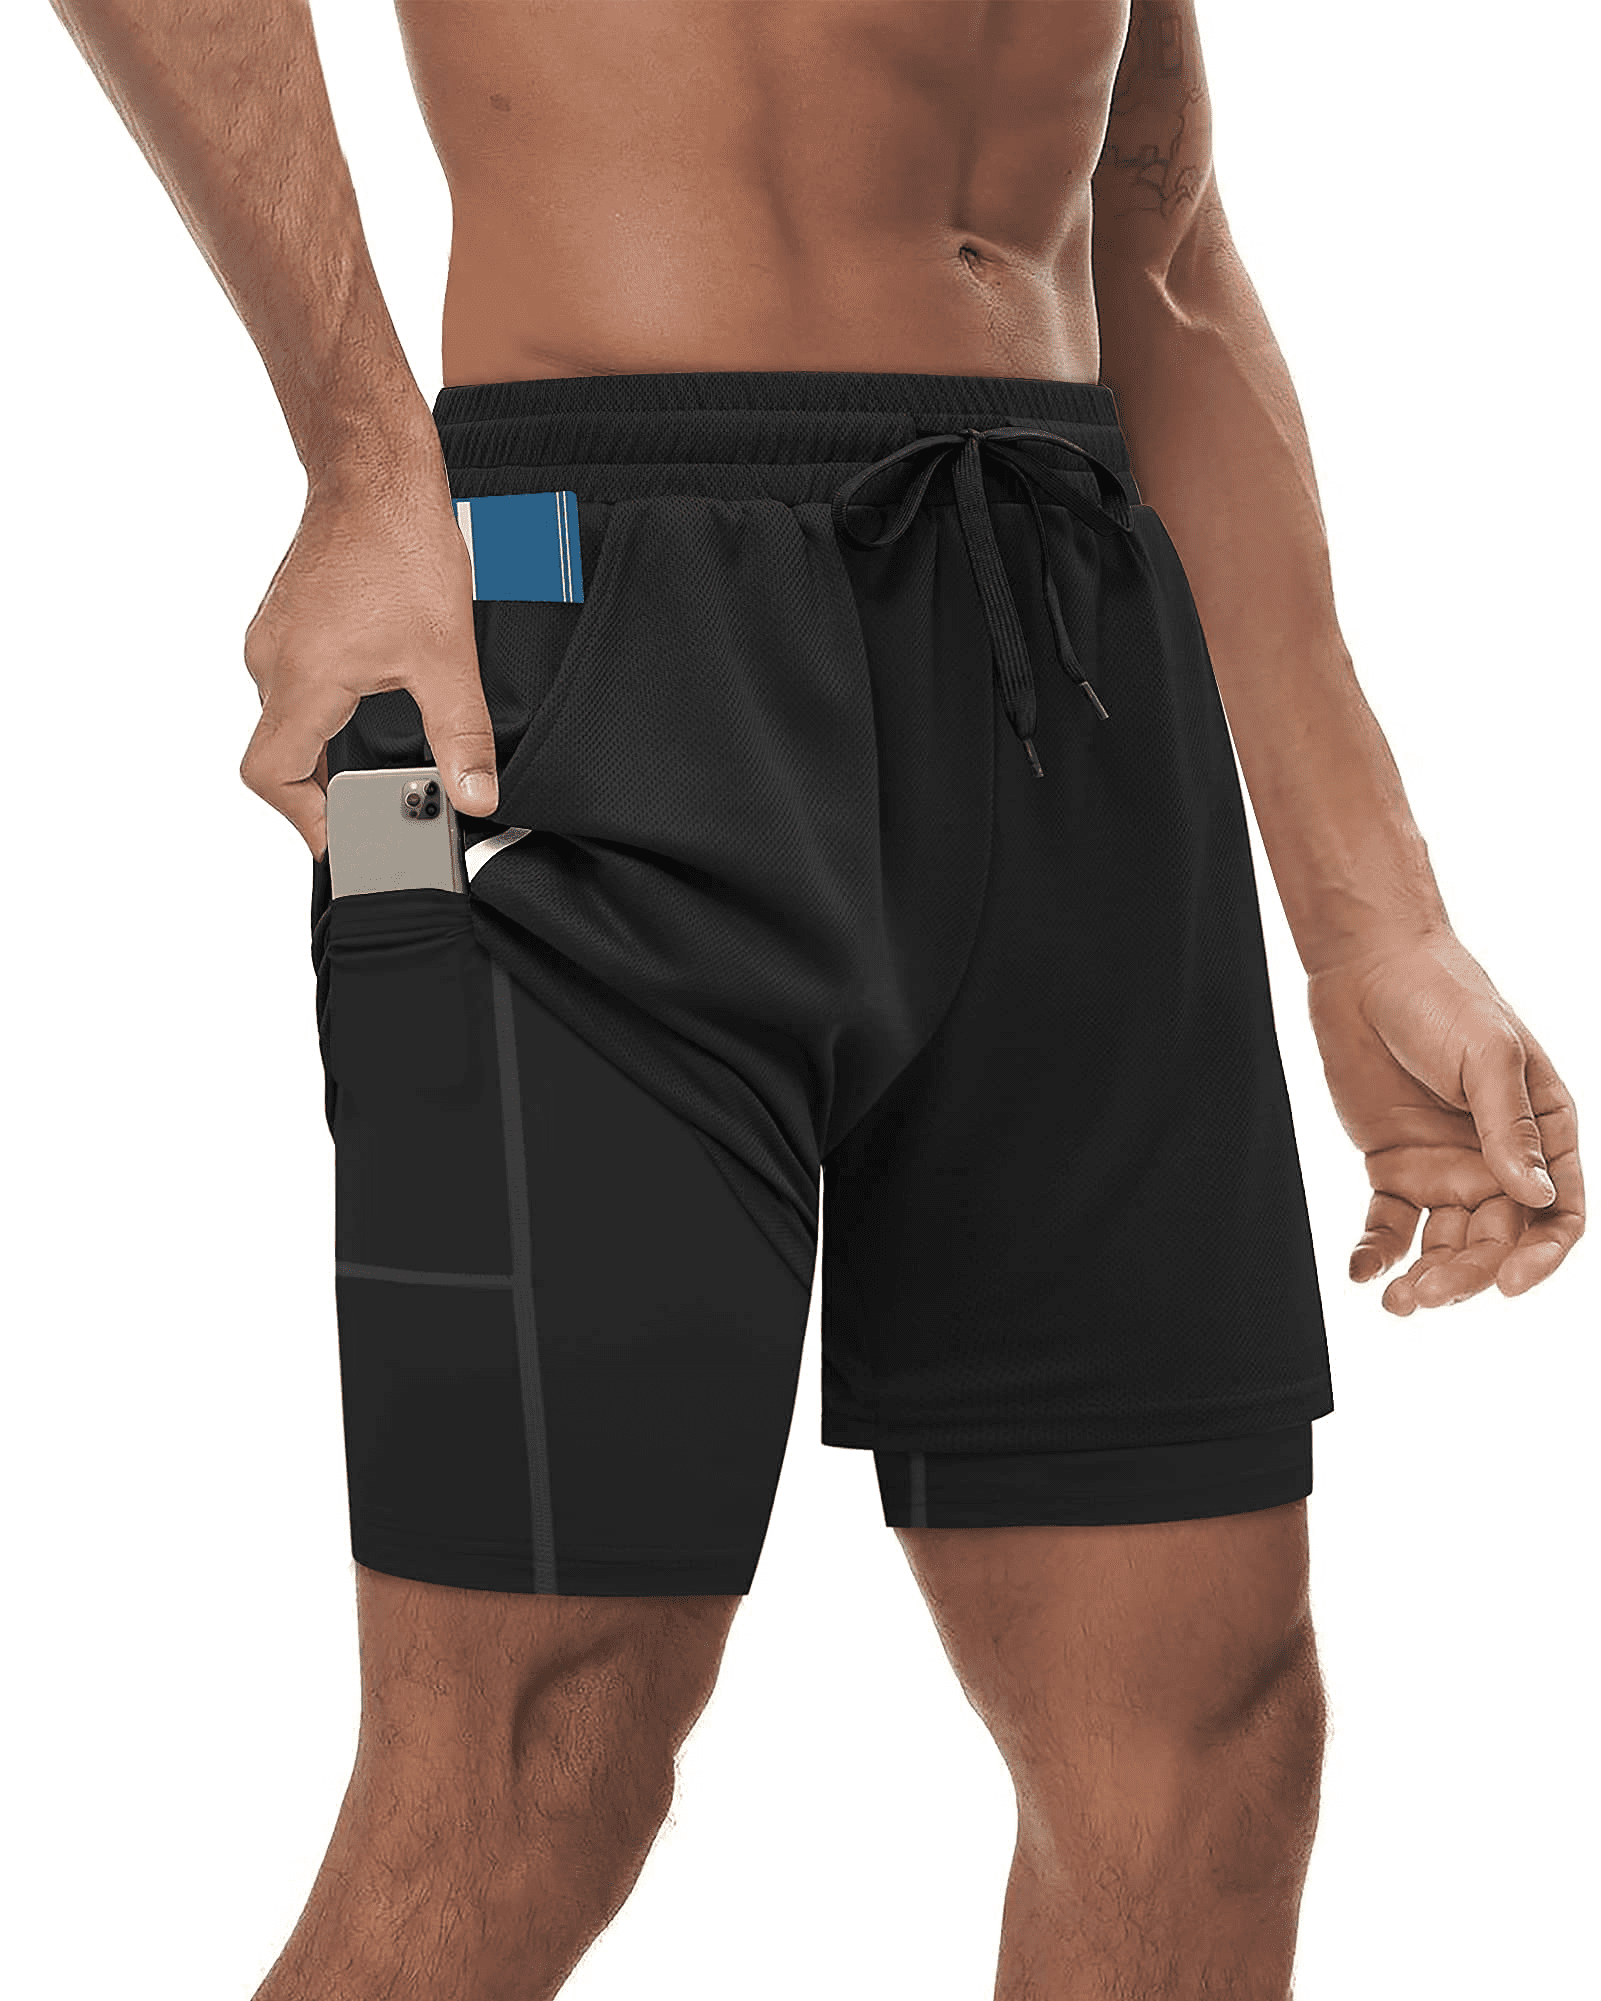 Neleus Men's 7 Mesh Running Workout Shorts with Pockets 